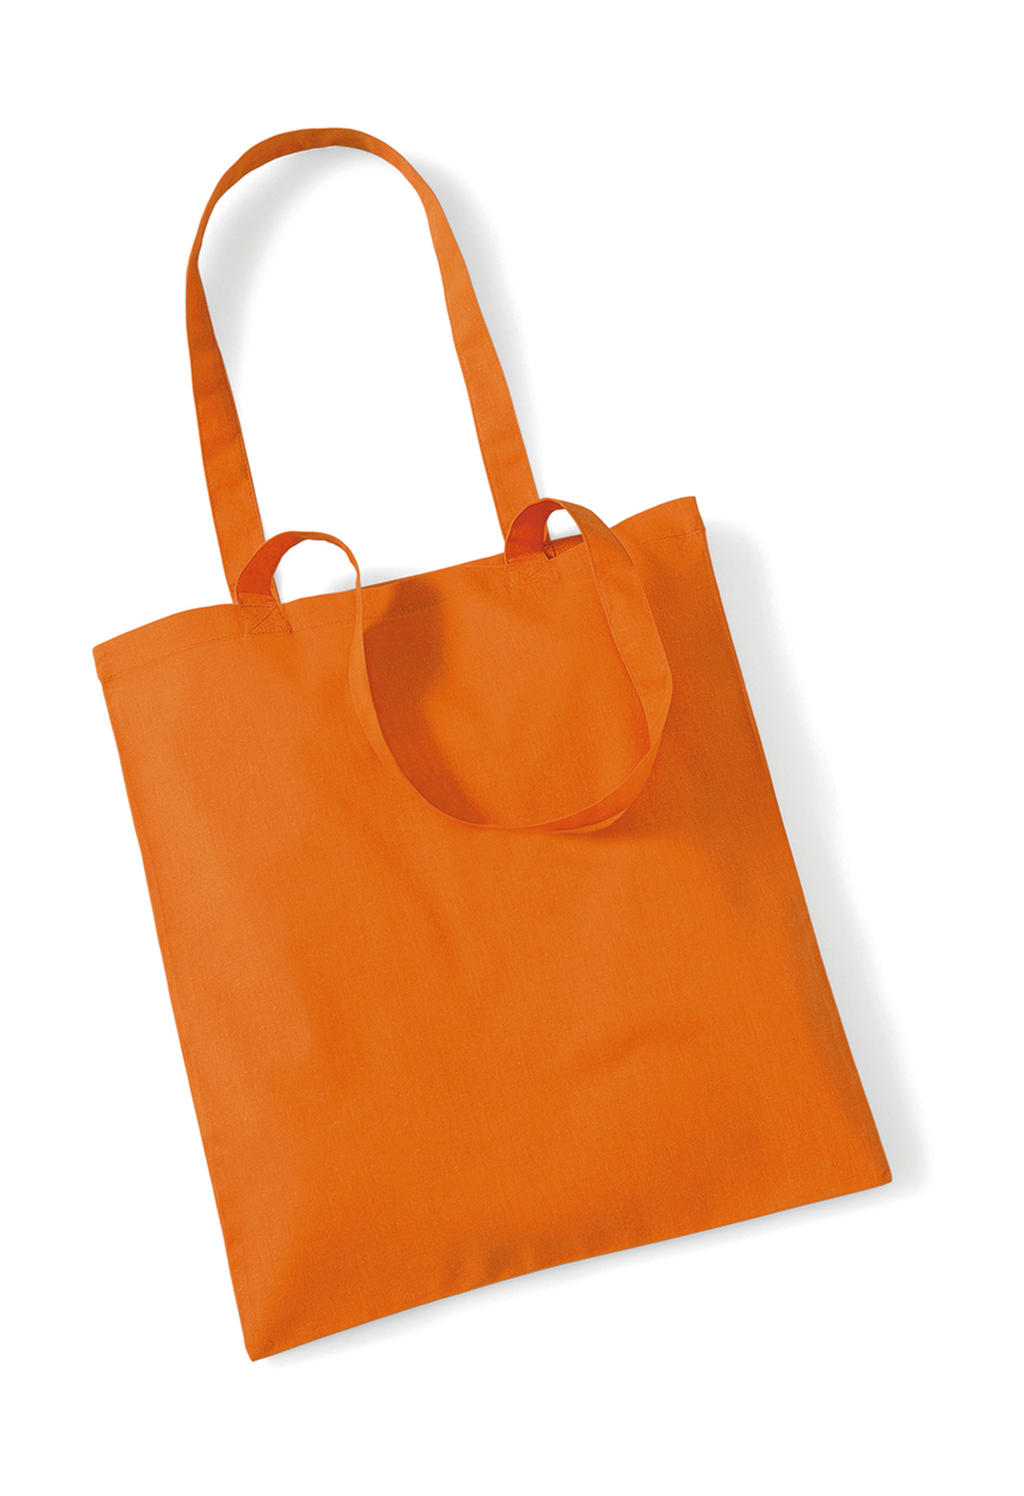  Bag for Life - Long Handles in Farbe Orange